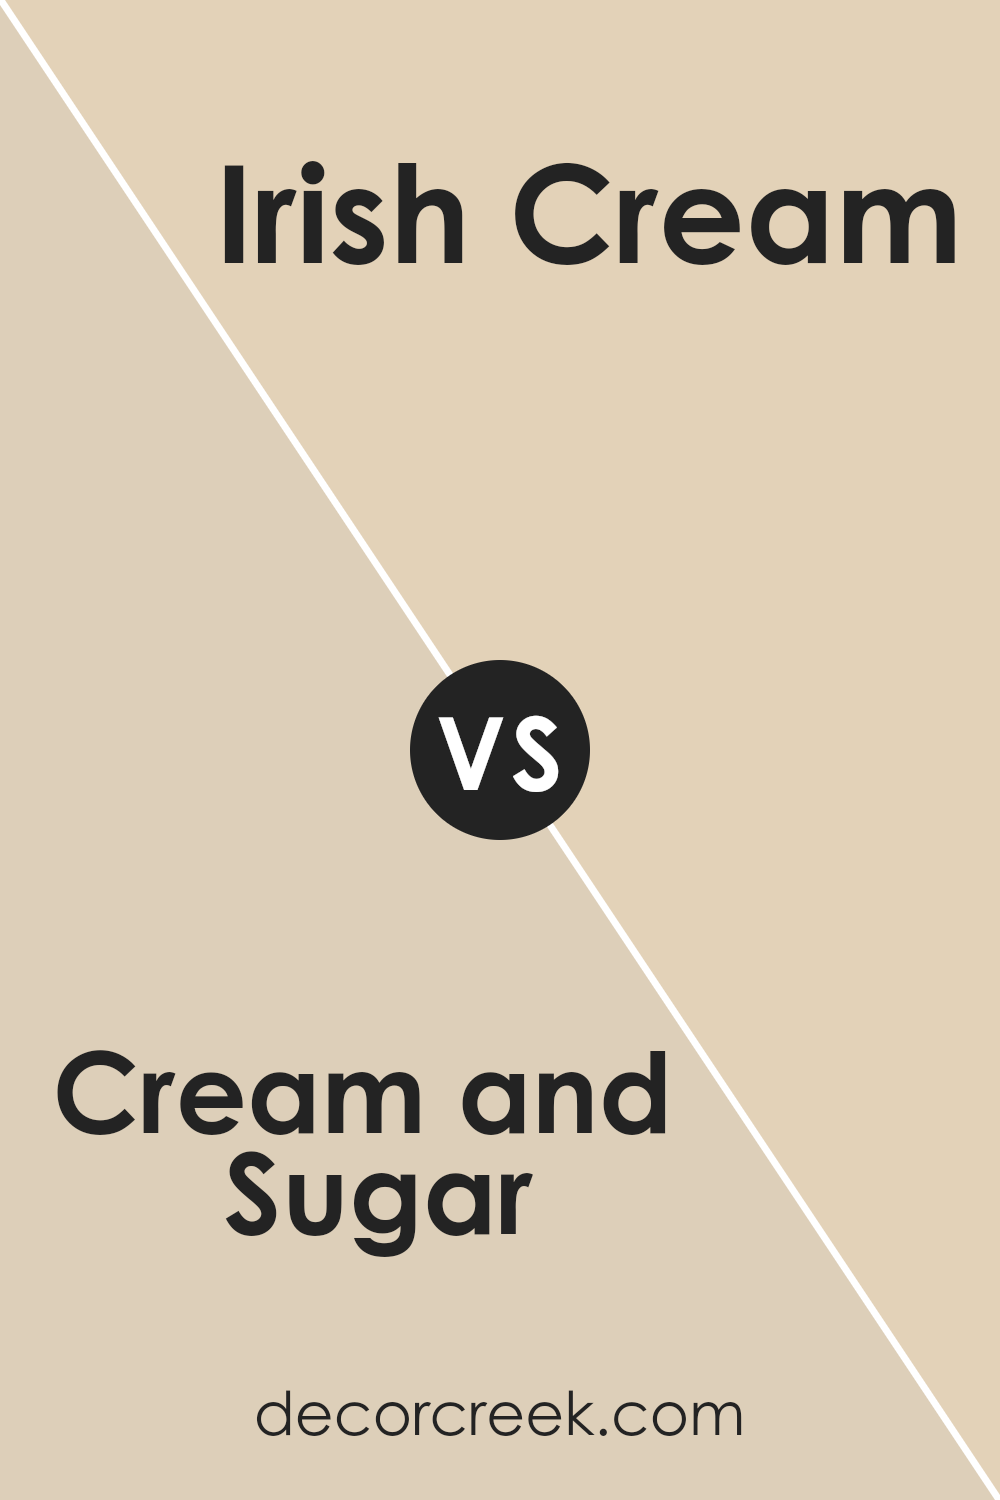 cream_and_sugar_sw_9507_vs_irish_cream_sw_7537